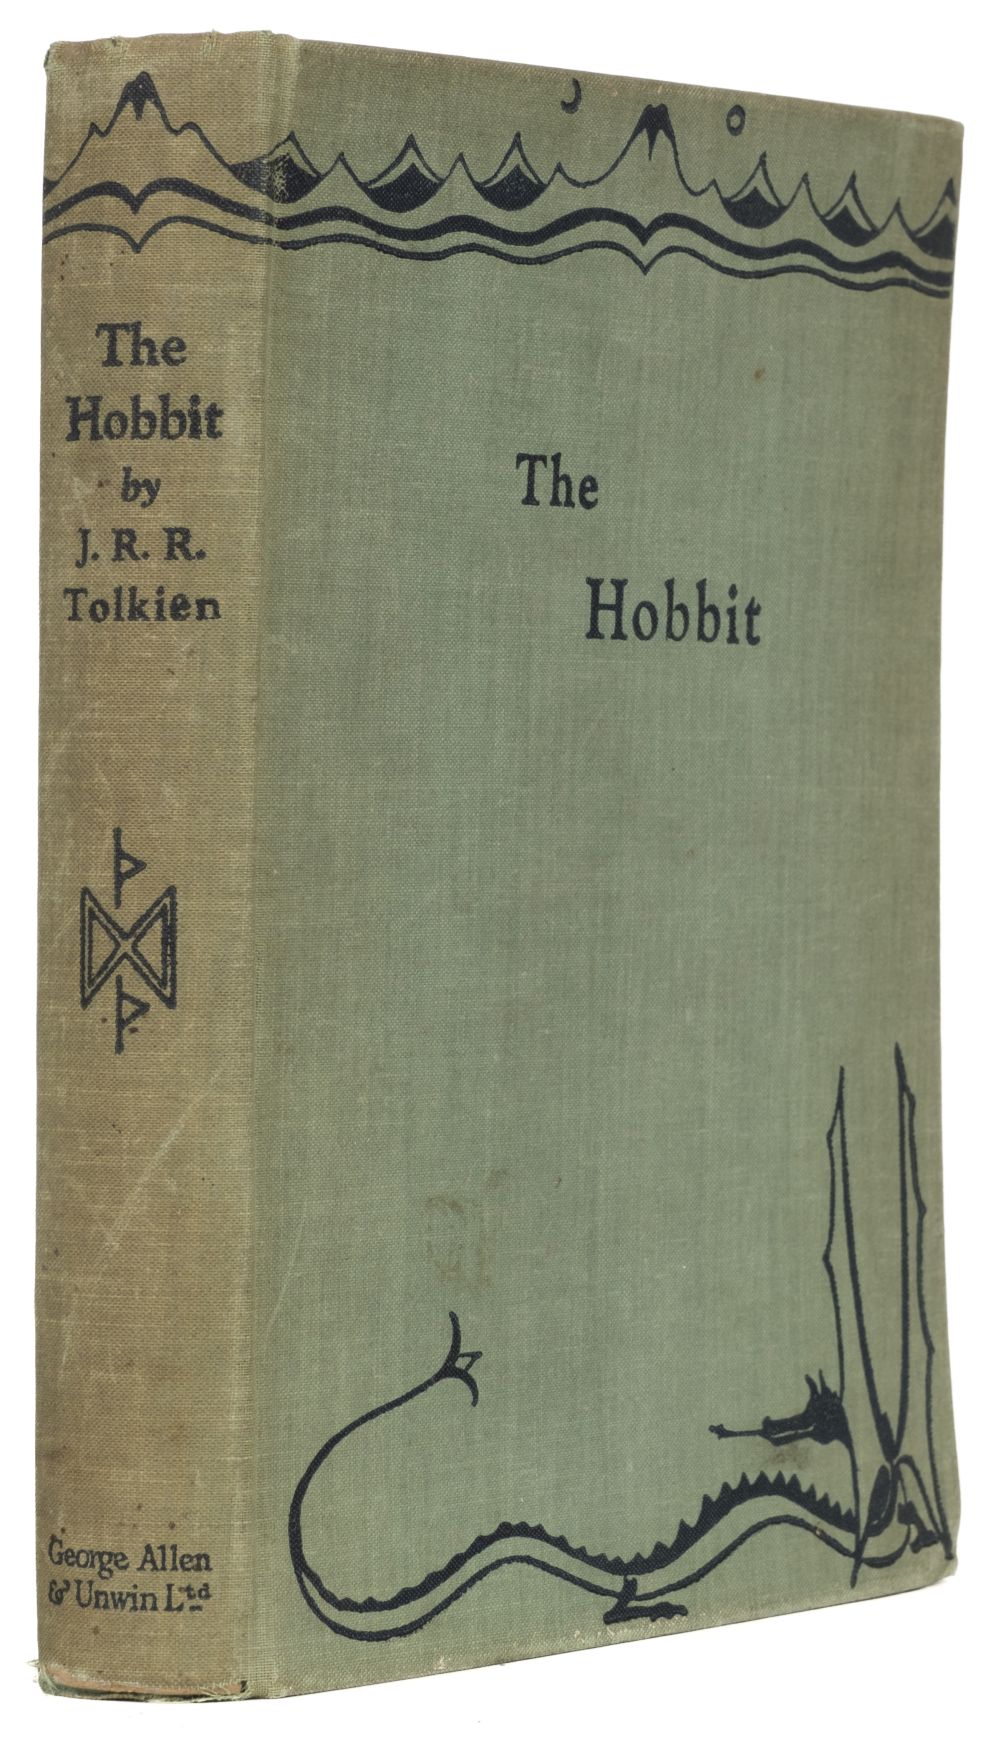 Tolkien (J.R.R.) The Hobbit, 2nd impression, 1937